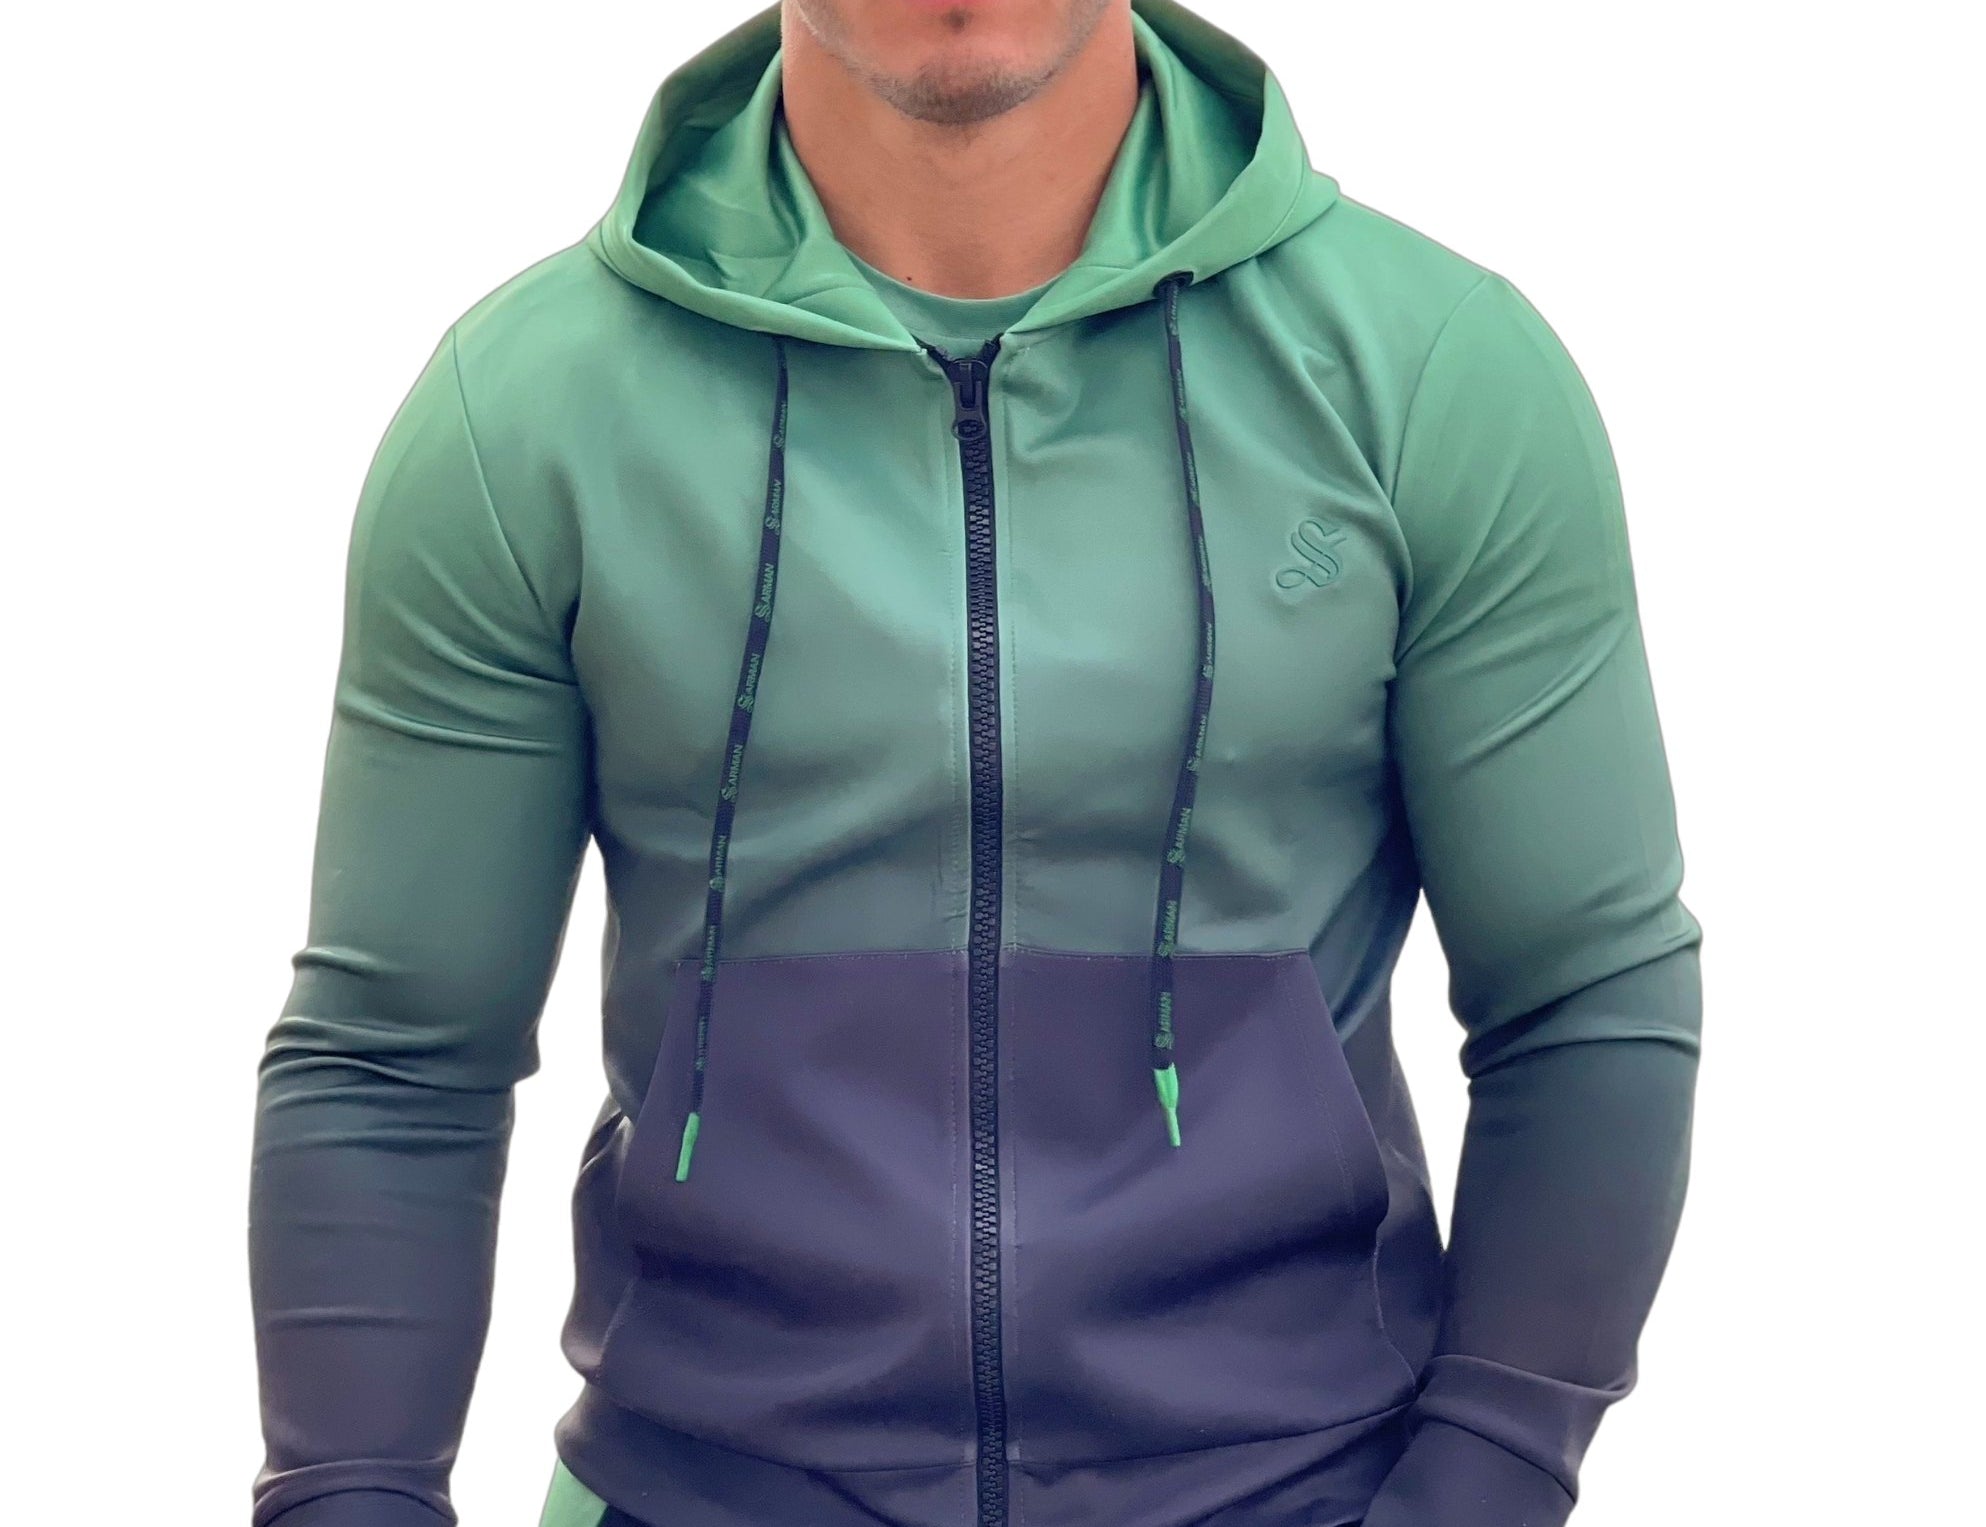 RockaBelti - Black/Khaki Hoodie for Men - Sarman Fashion - Wholesale Clothing Fashion Brand for Men from Canada